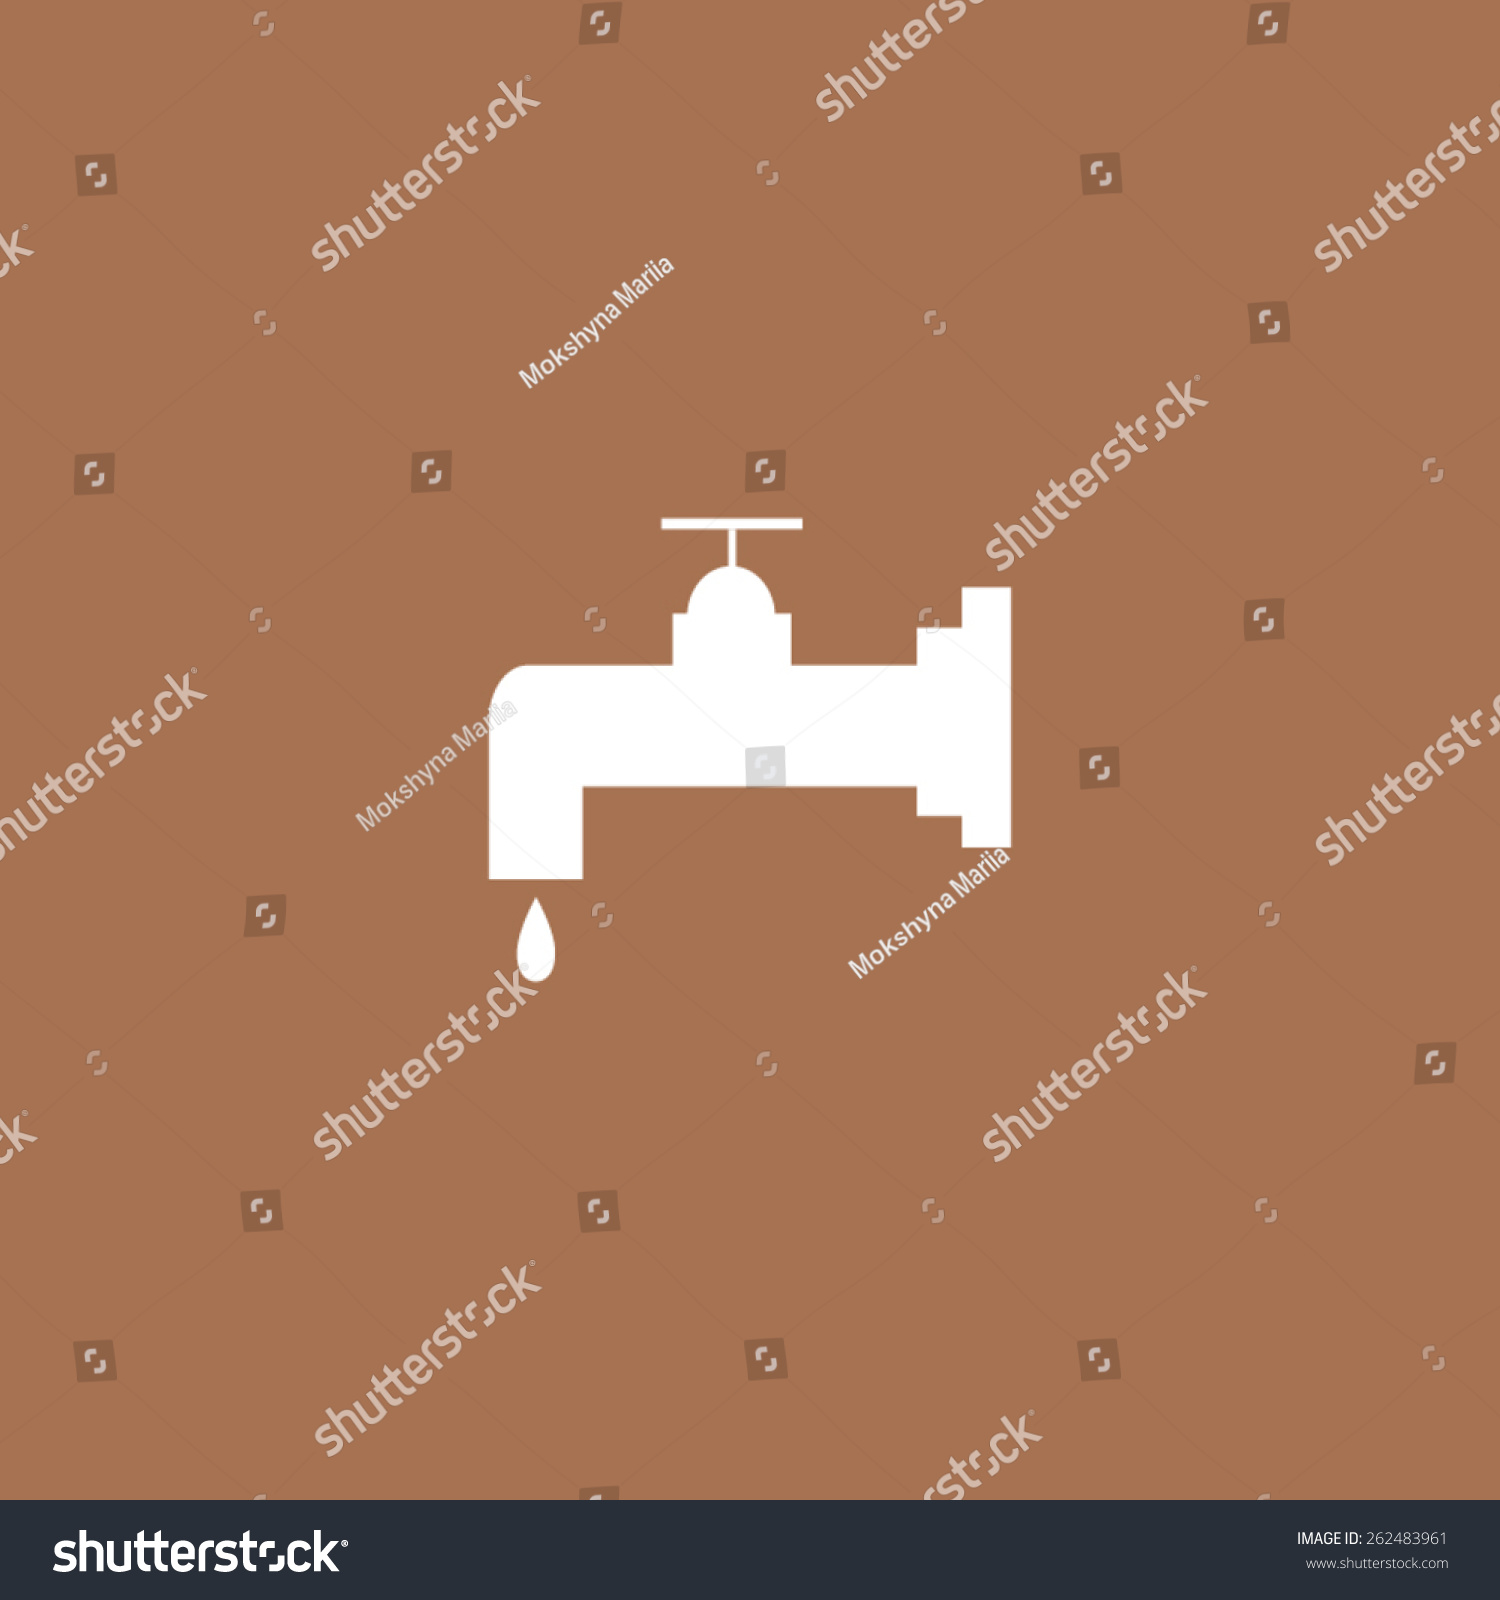 Faucet Stock Vector Illustration 262483961 : Shutterstock